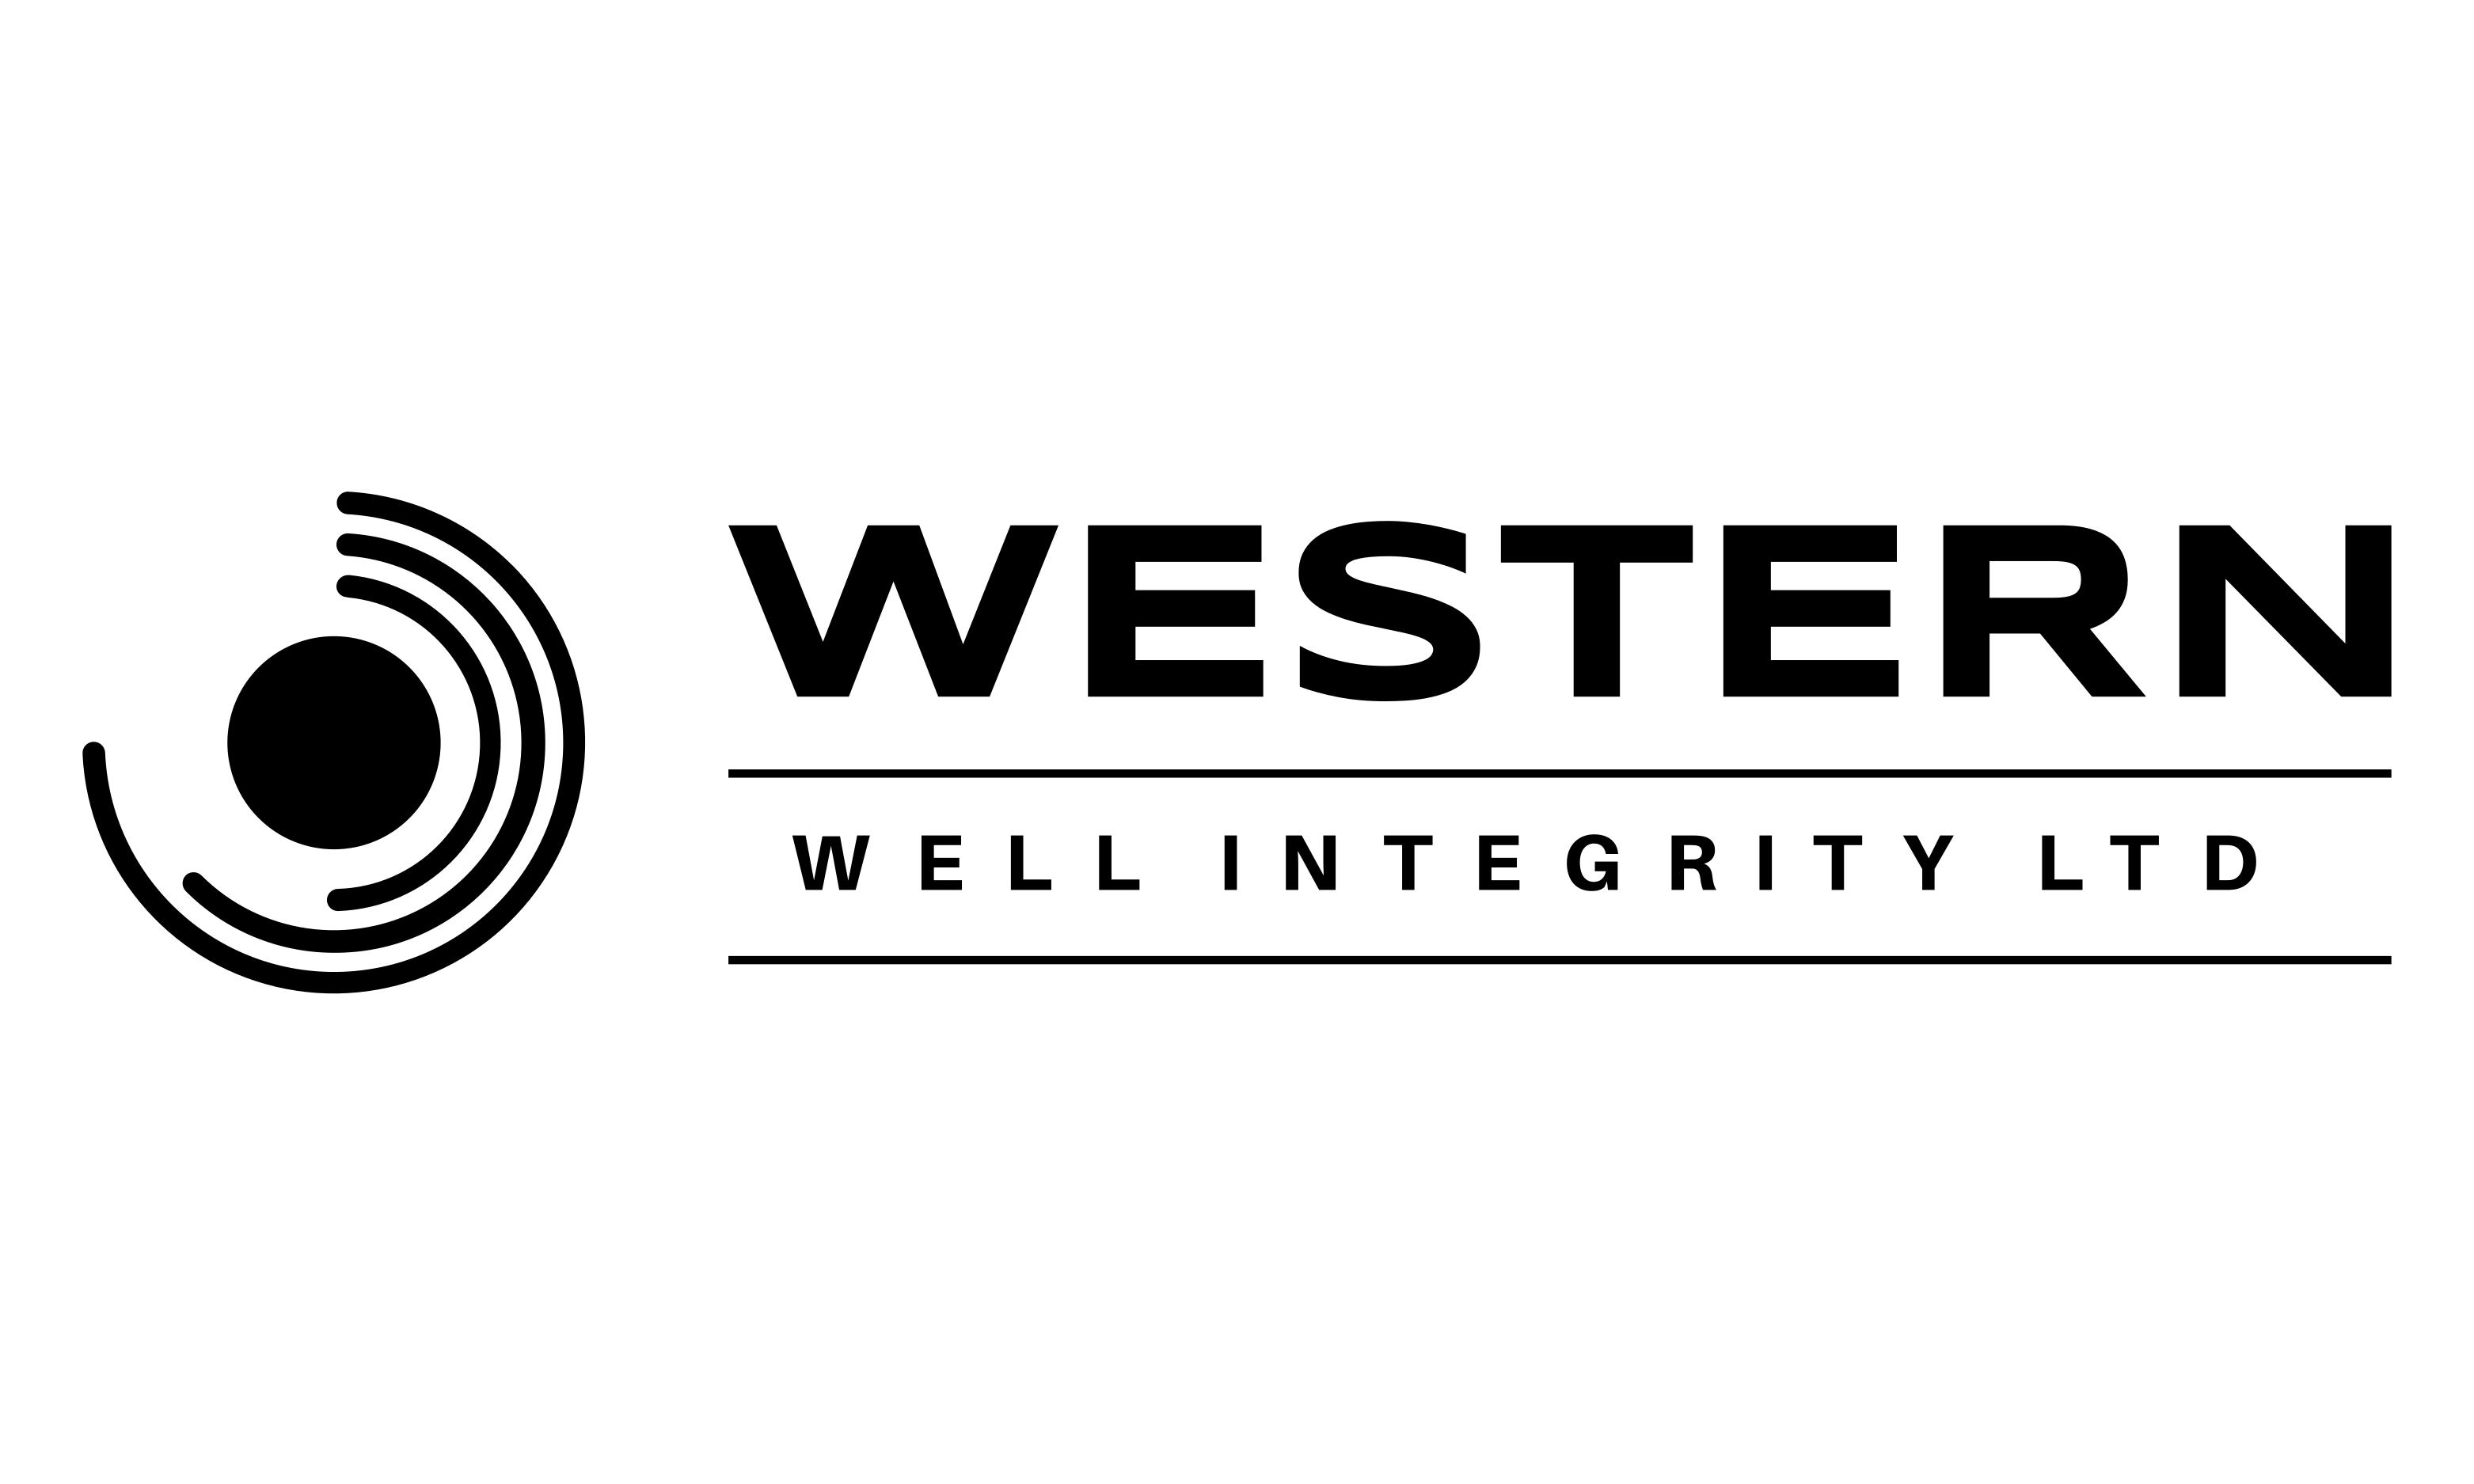 Western Well Integrity Ltd. logo